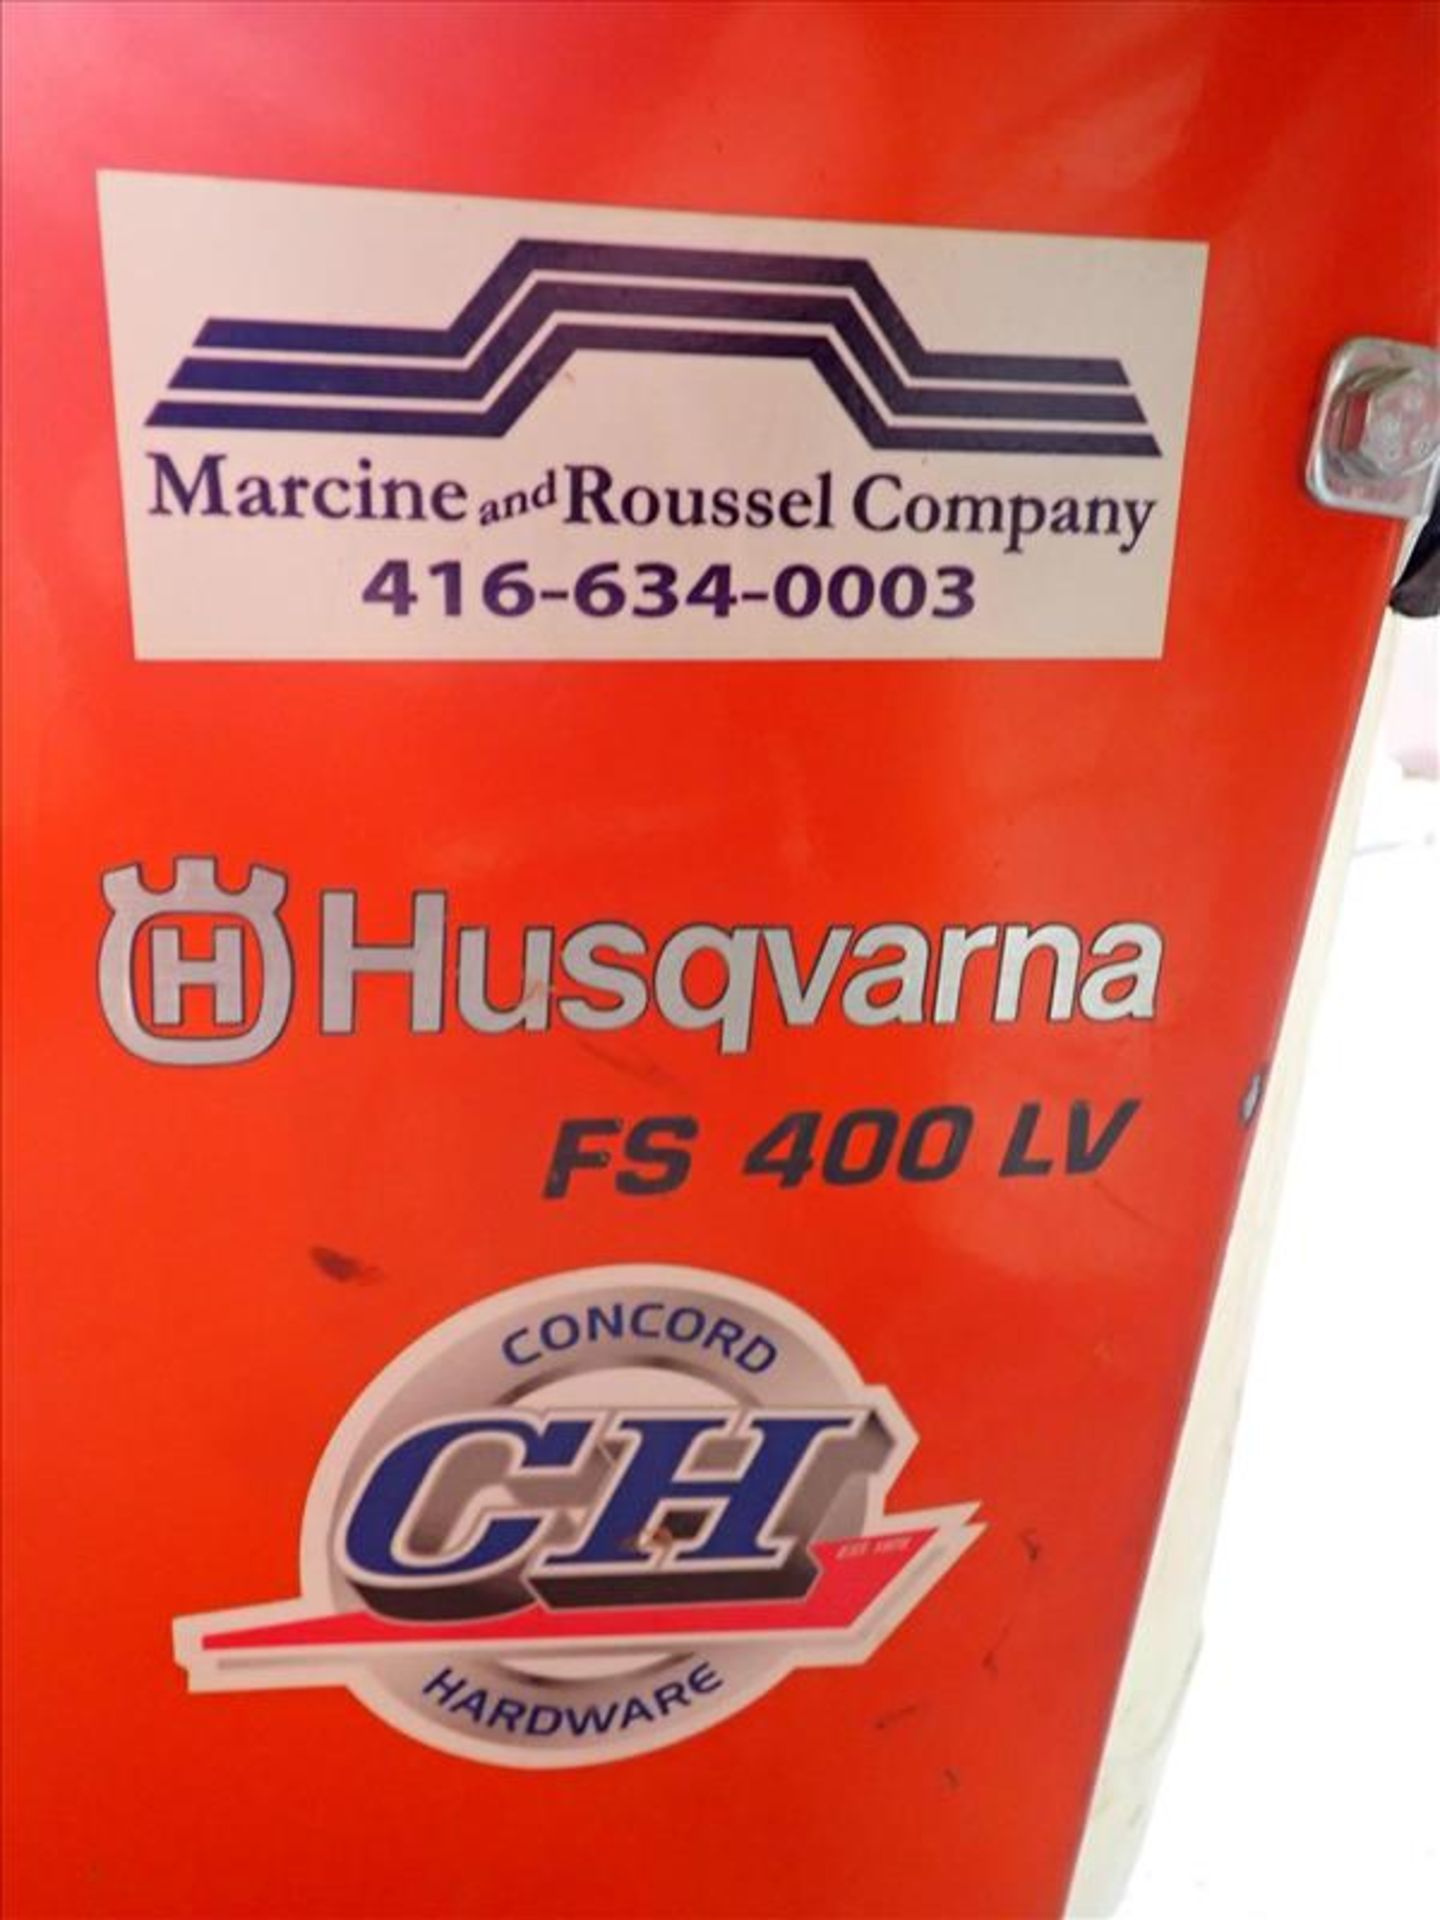 2016 Husqvarna Floor Saw, model FS400LV, S/N.20160200008, w/four stroke engine, 450mm max blade - Image 3 of 5